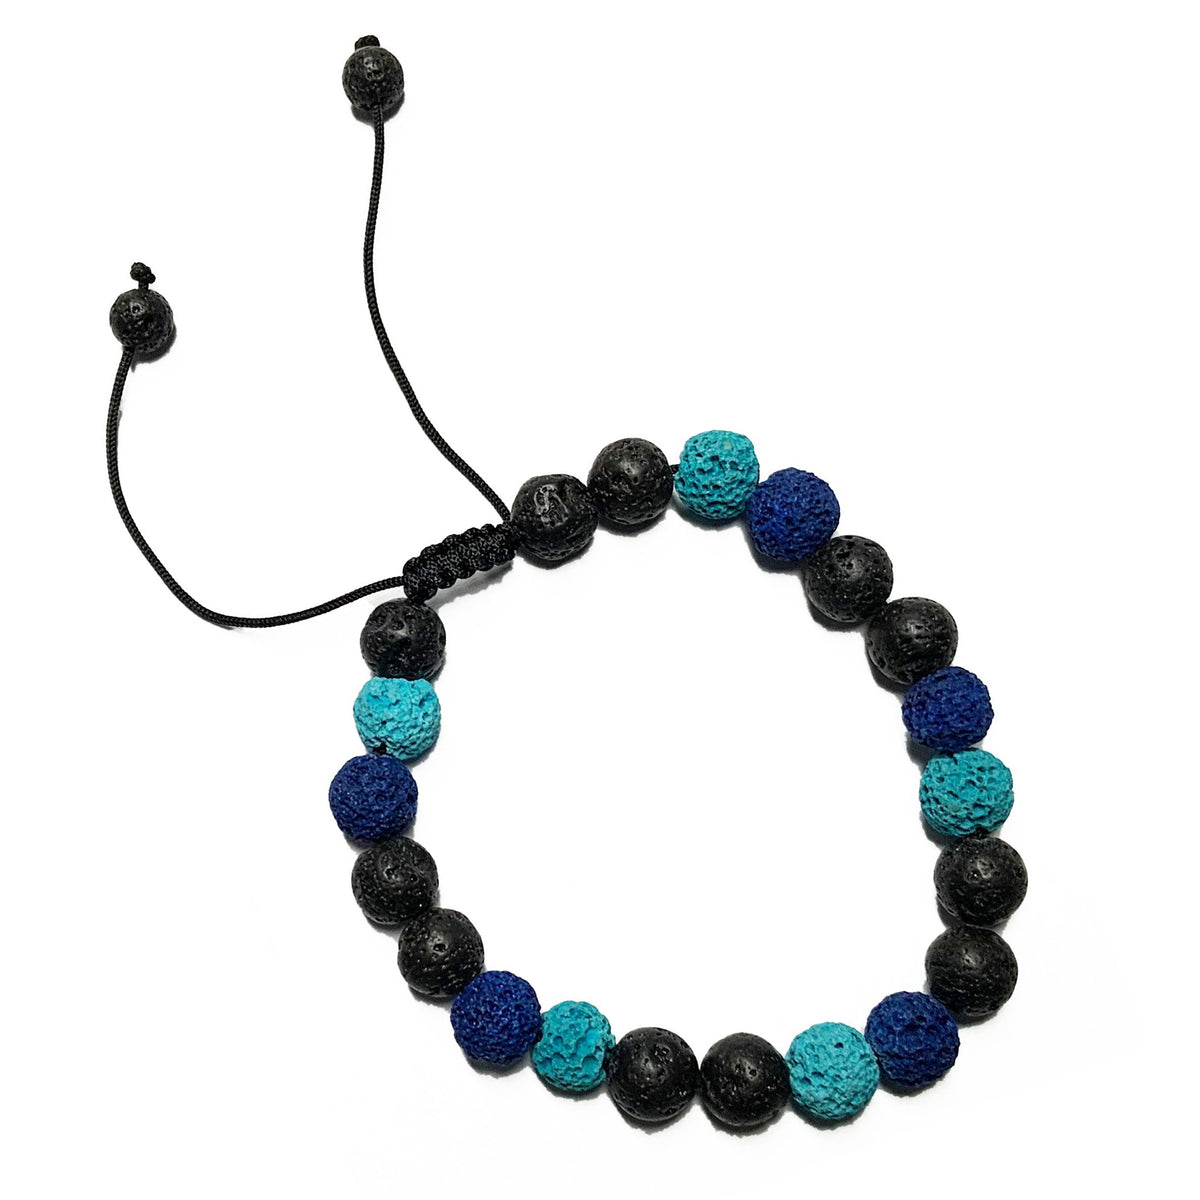 Bracelet beads with multiple sizes.